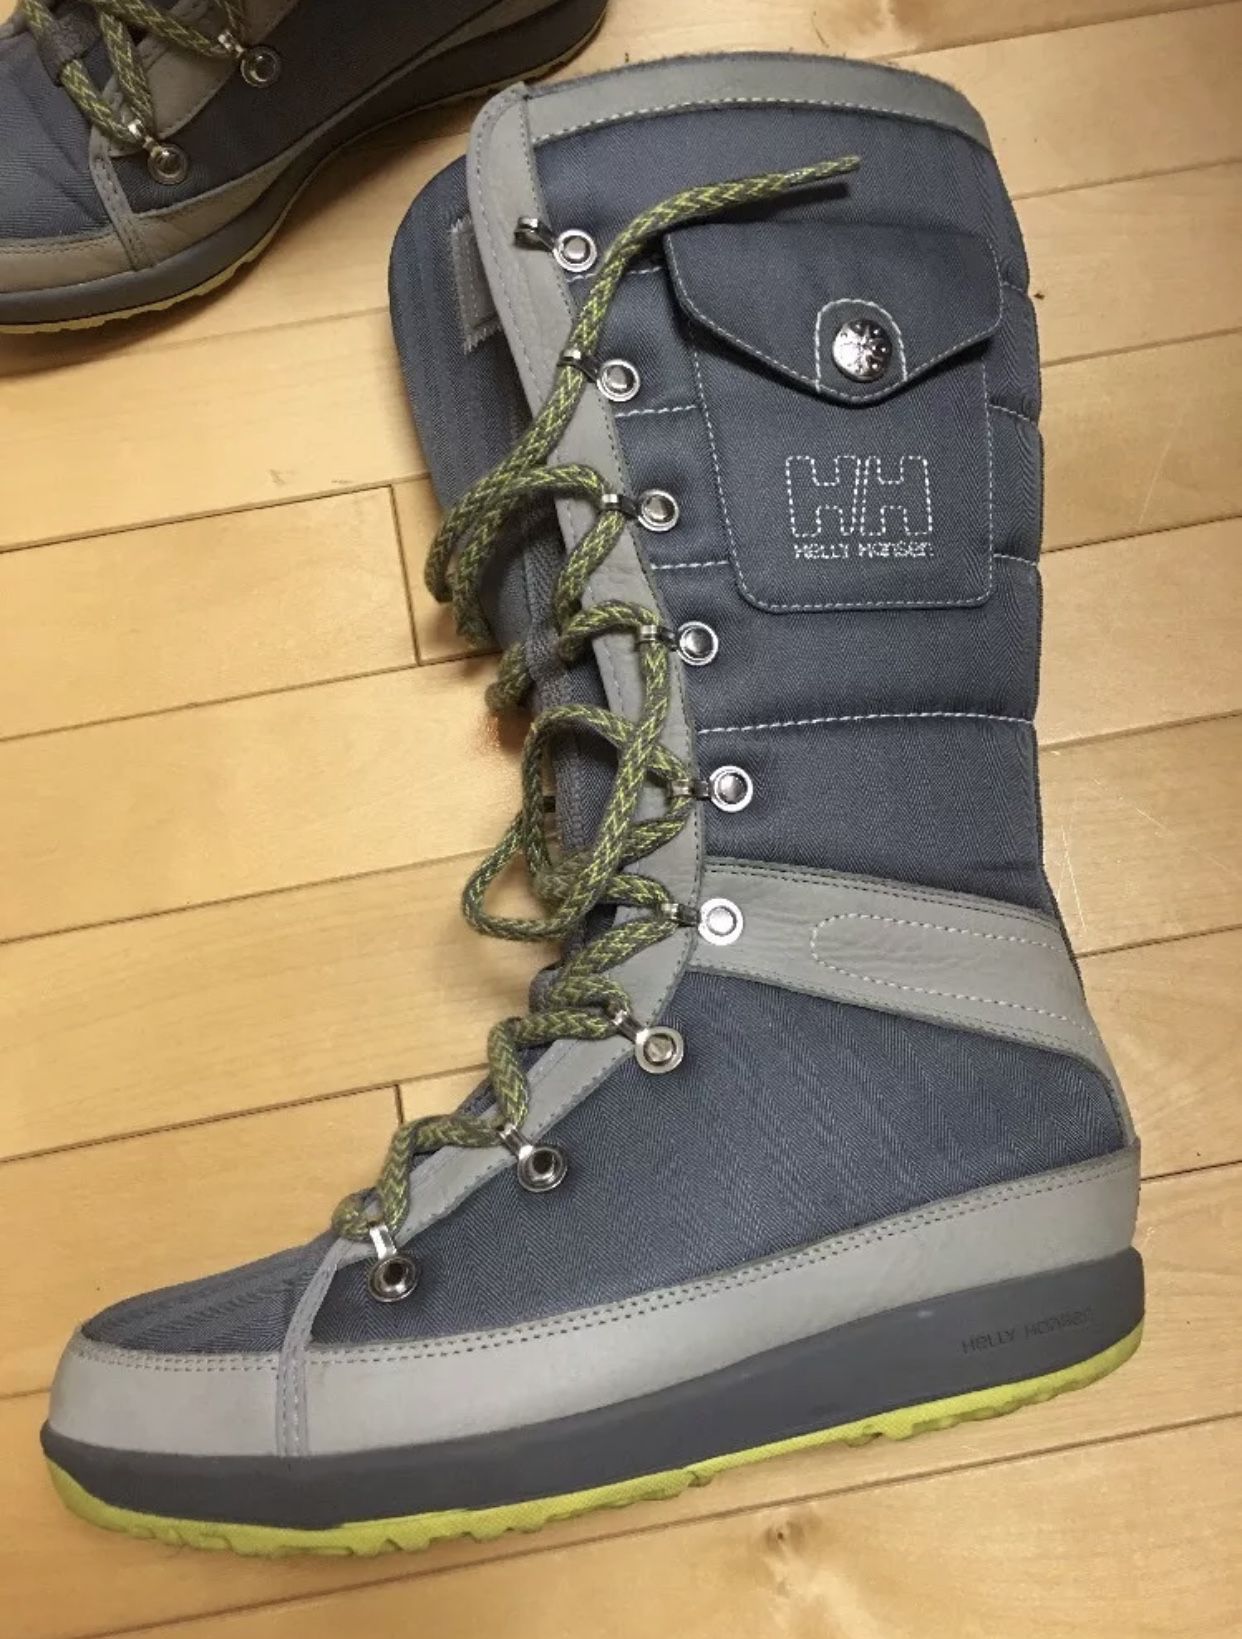 Helly Hansen Winter Parka Boots size 5.5